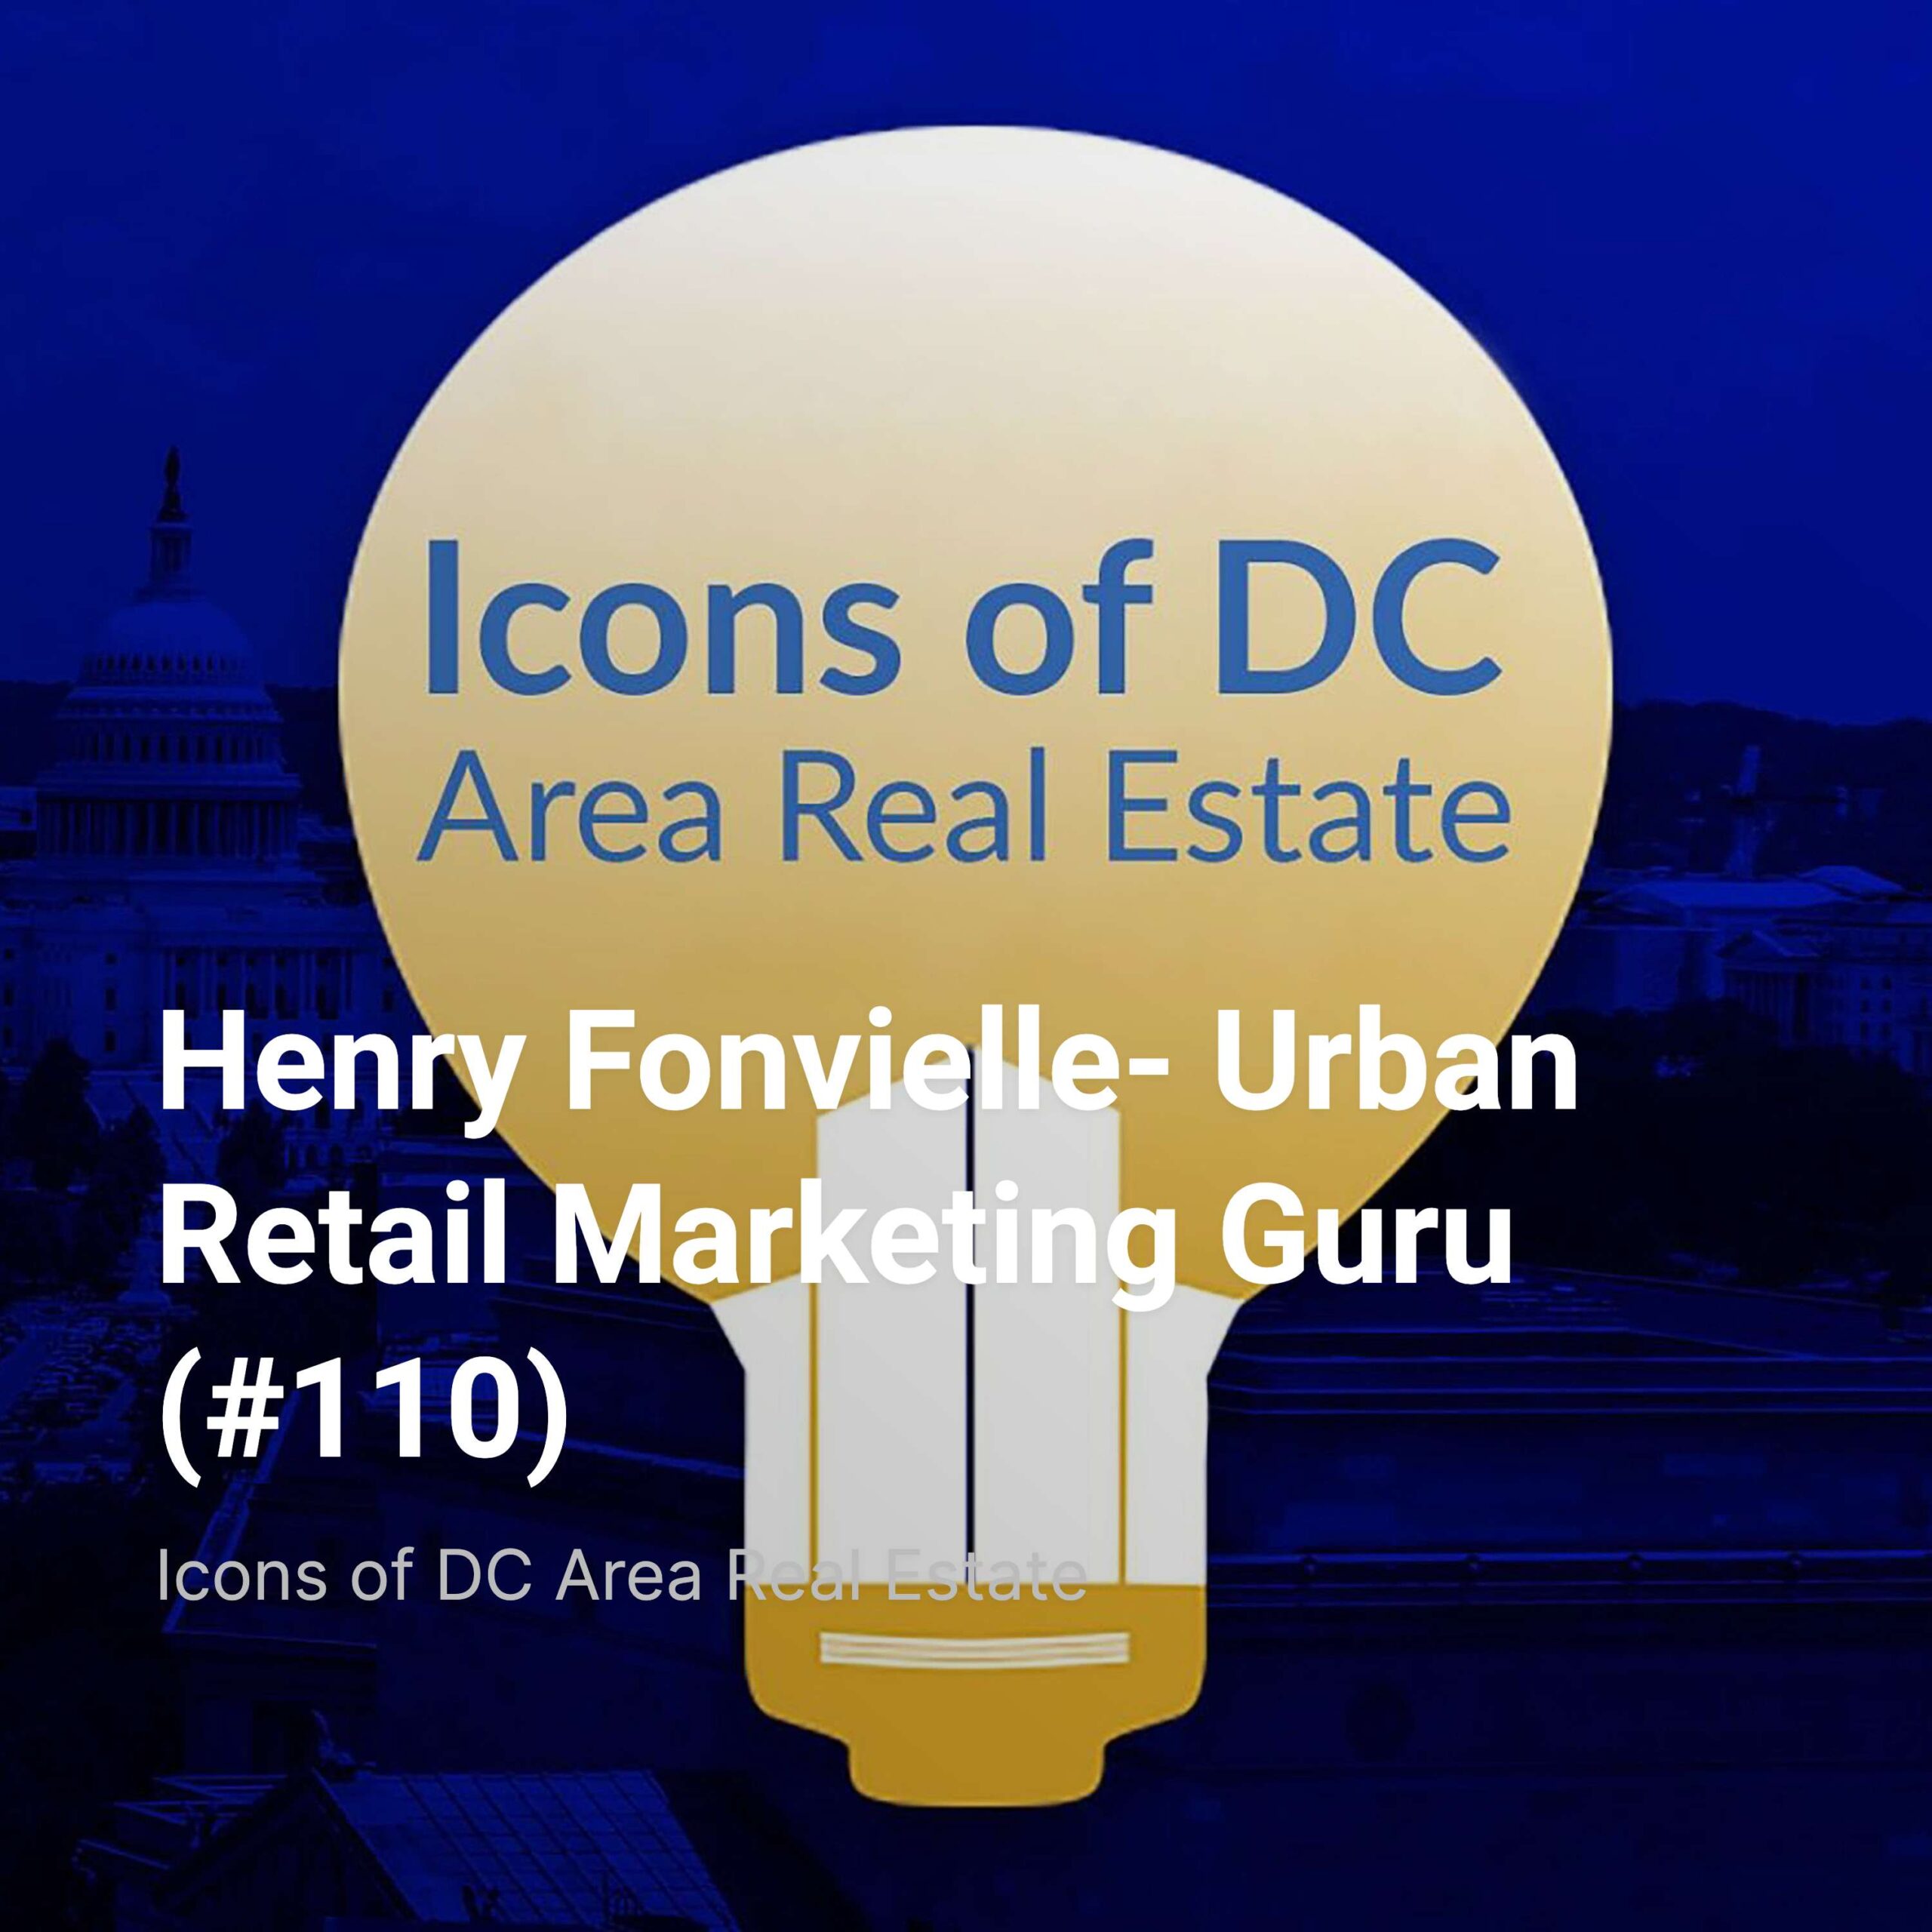 Henry Fonvielle- Urban Retail Marketing Guru (#110)